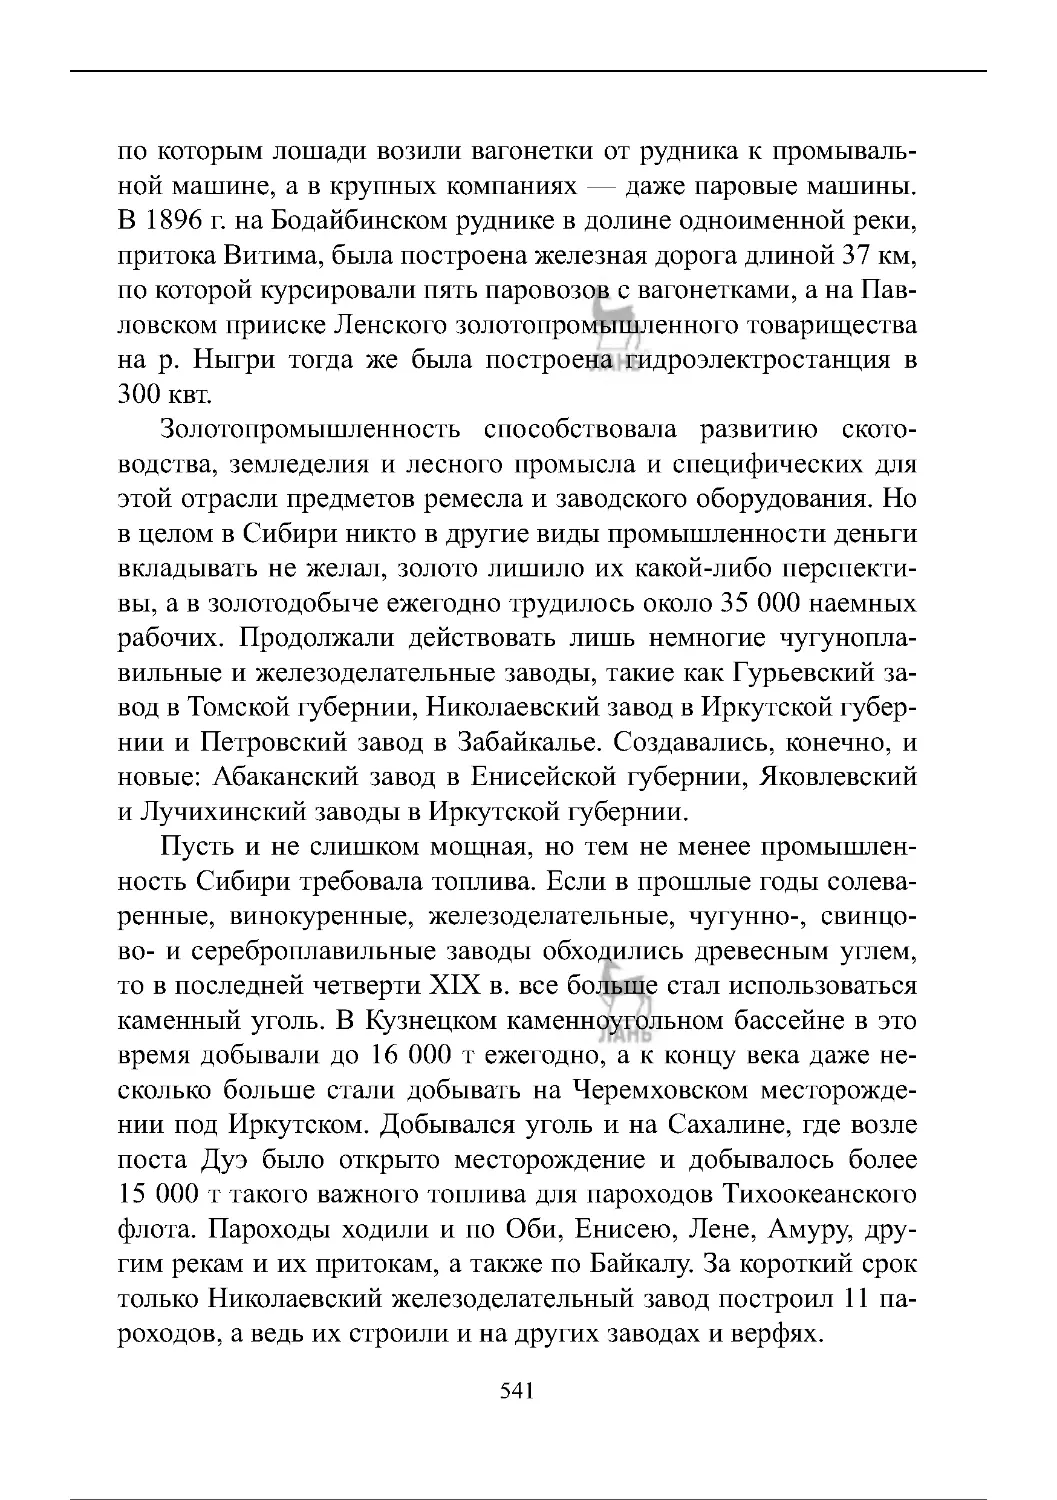 istoria_zavoevania_i_kolonizacii_sibiri_541-600